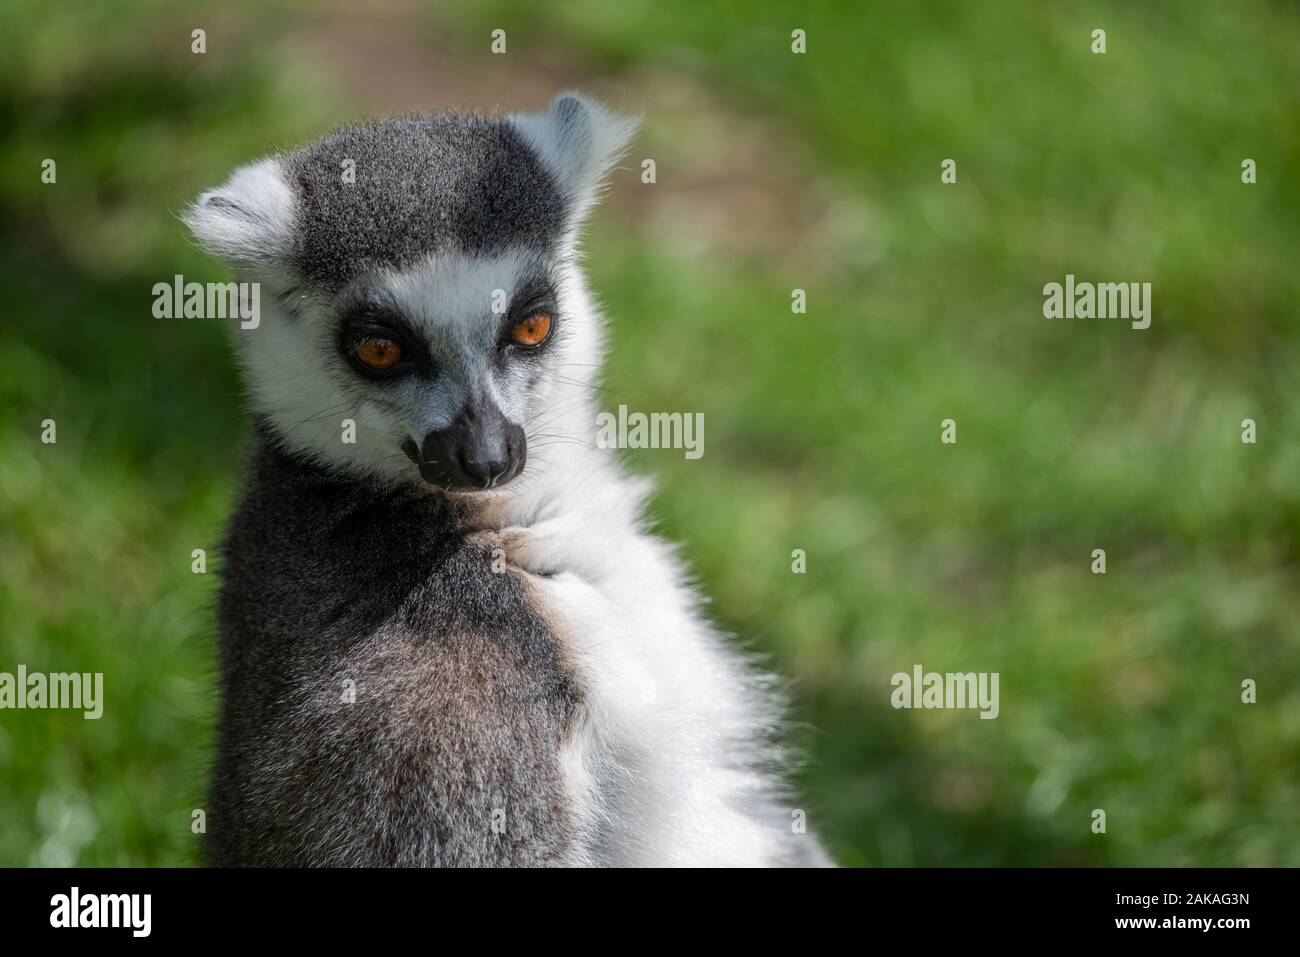 A lemur basks in the sunlight Stock Photo